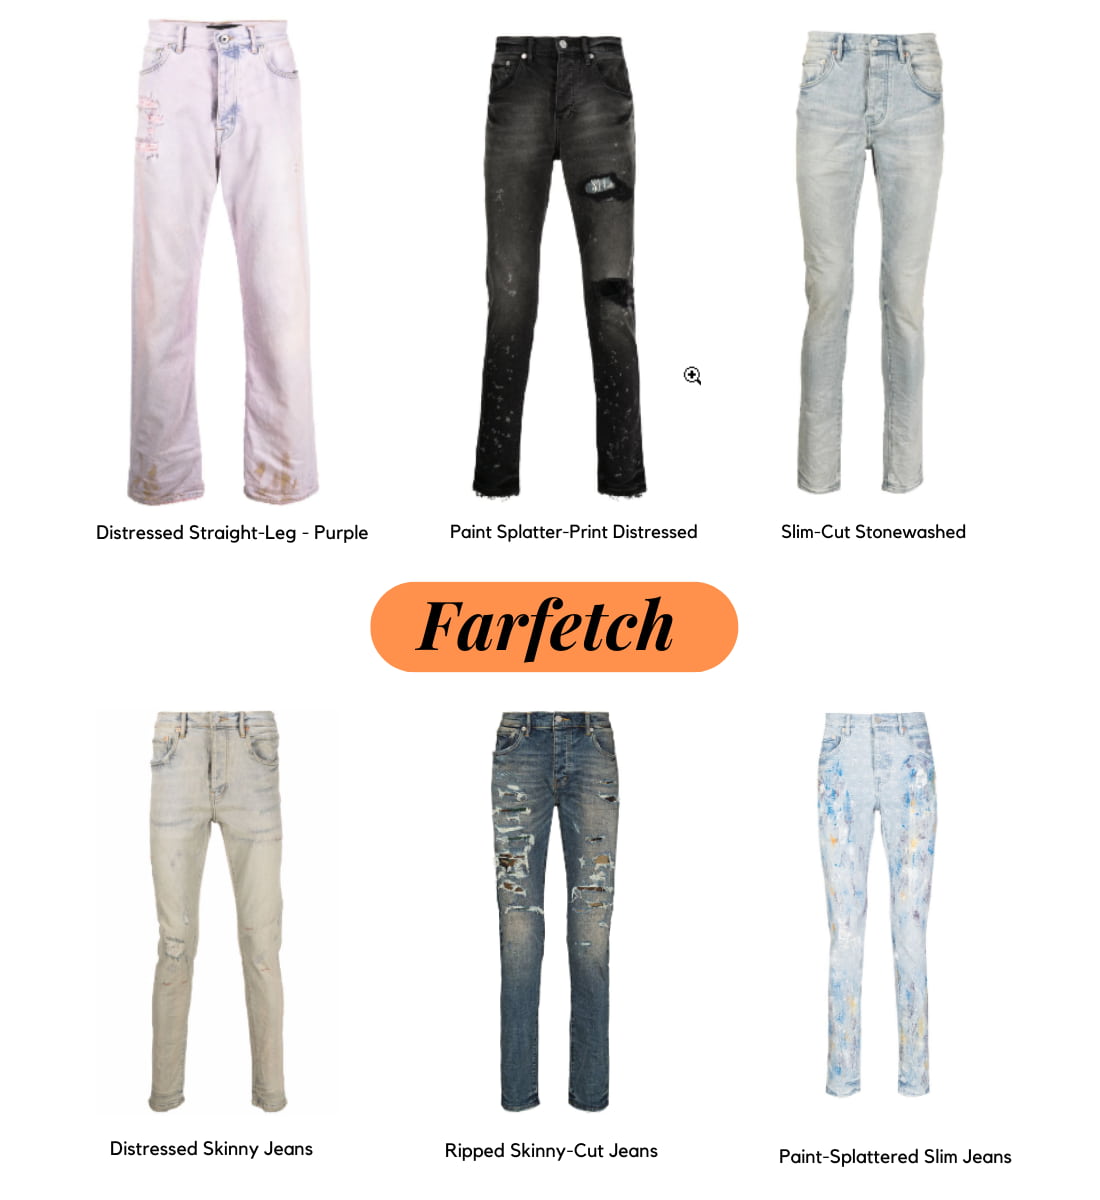 Purple Brand Jeans on Sale at Farfetch